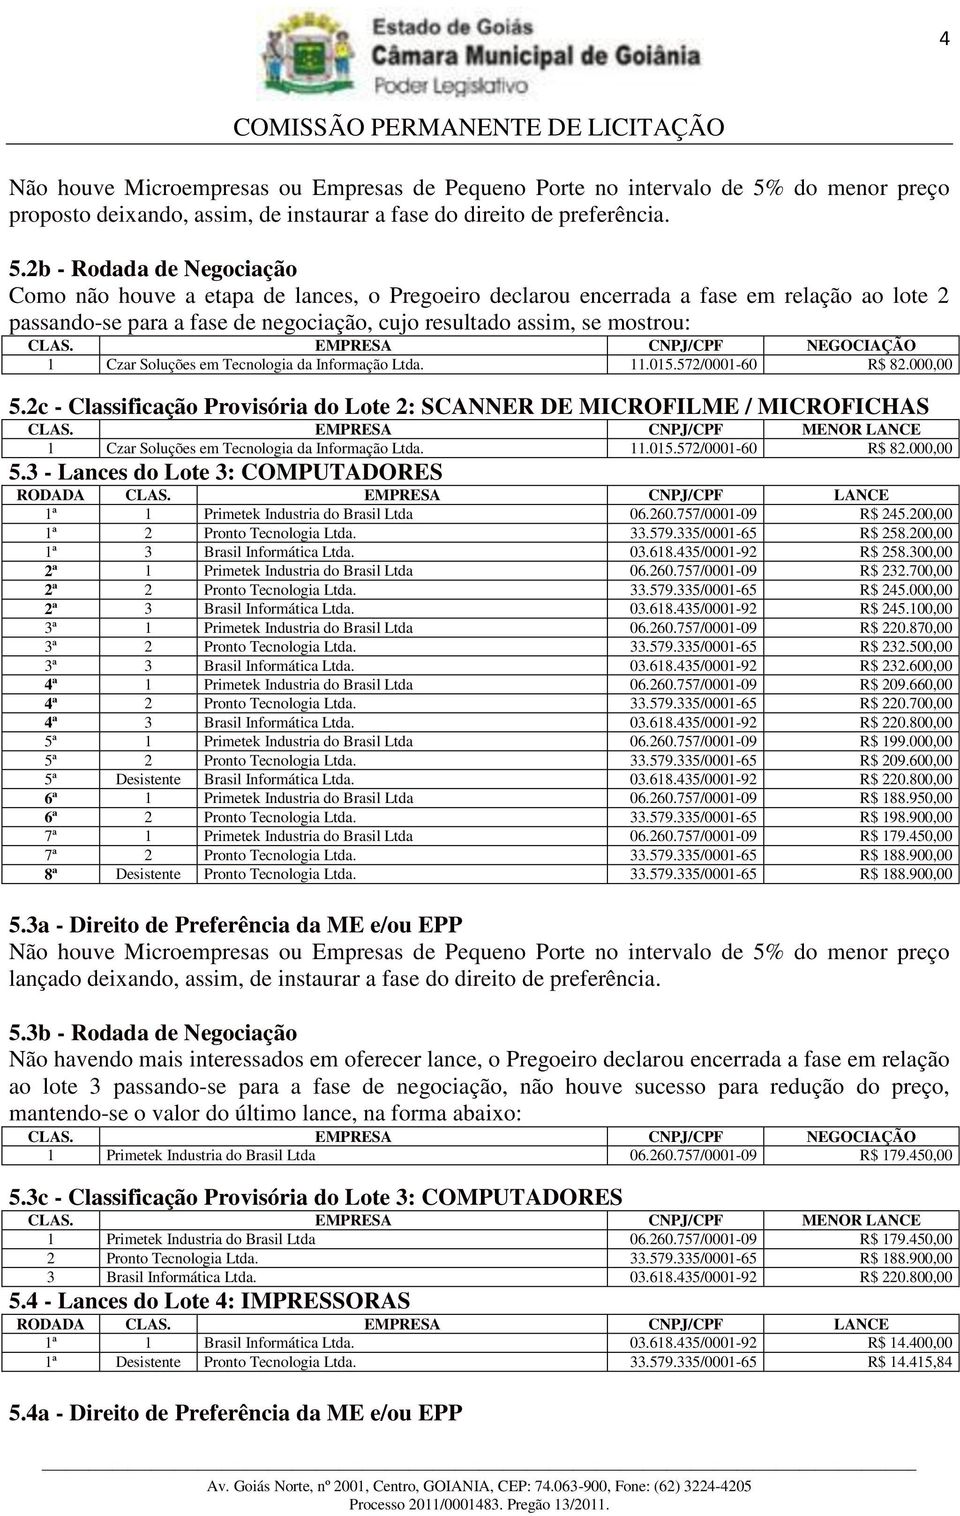 2c - Classificação Provisória do Lote 2: SCANNER DE MICROFILME / MICROFICHAS 1 3 - Lances do Lote 3: COMPUTADORES RODADA CLAS. EMPRESA CNPJ/CPF LANCE 1ª 1 Primetek Industria do Brasil Ltda 06.260.